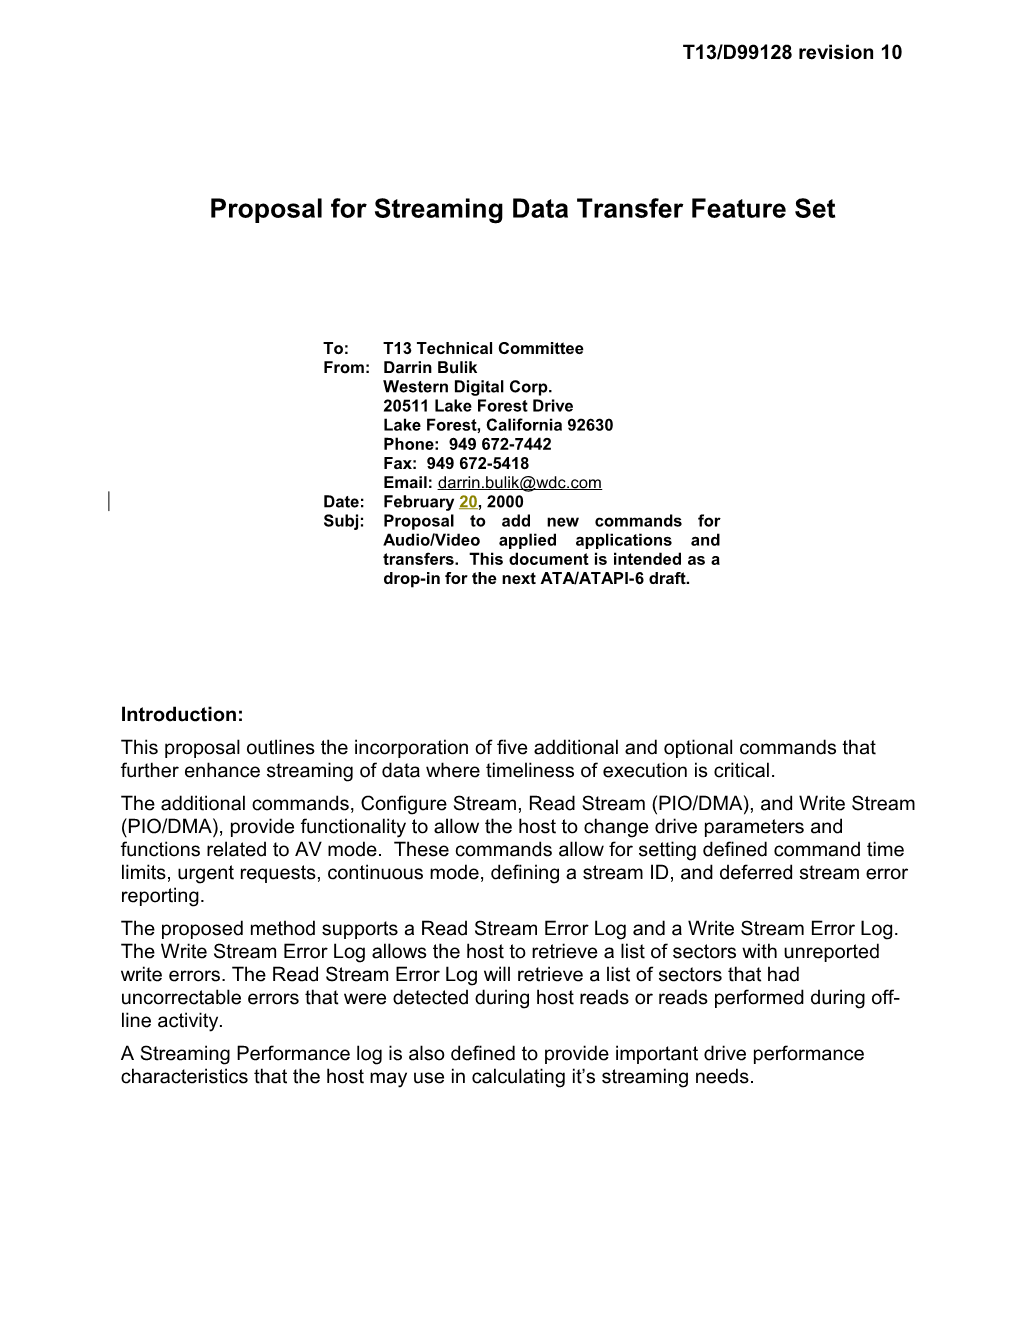 Streaming Data Transfer Command Set